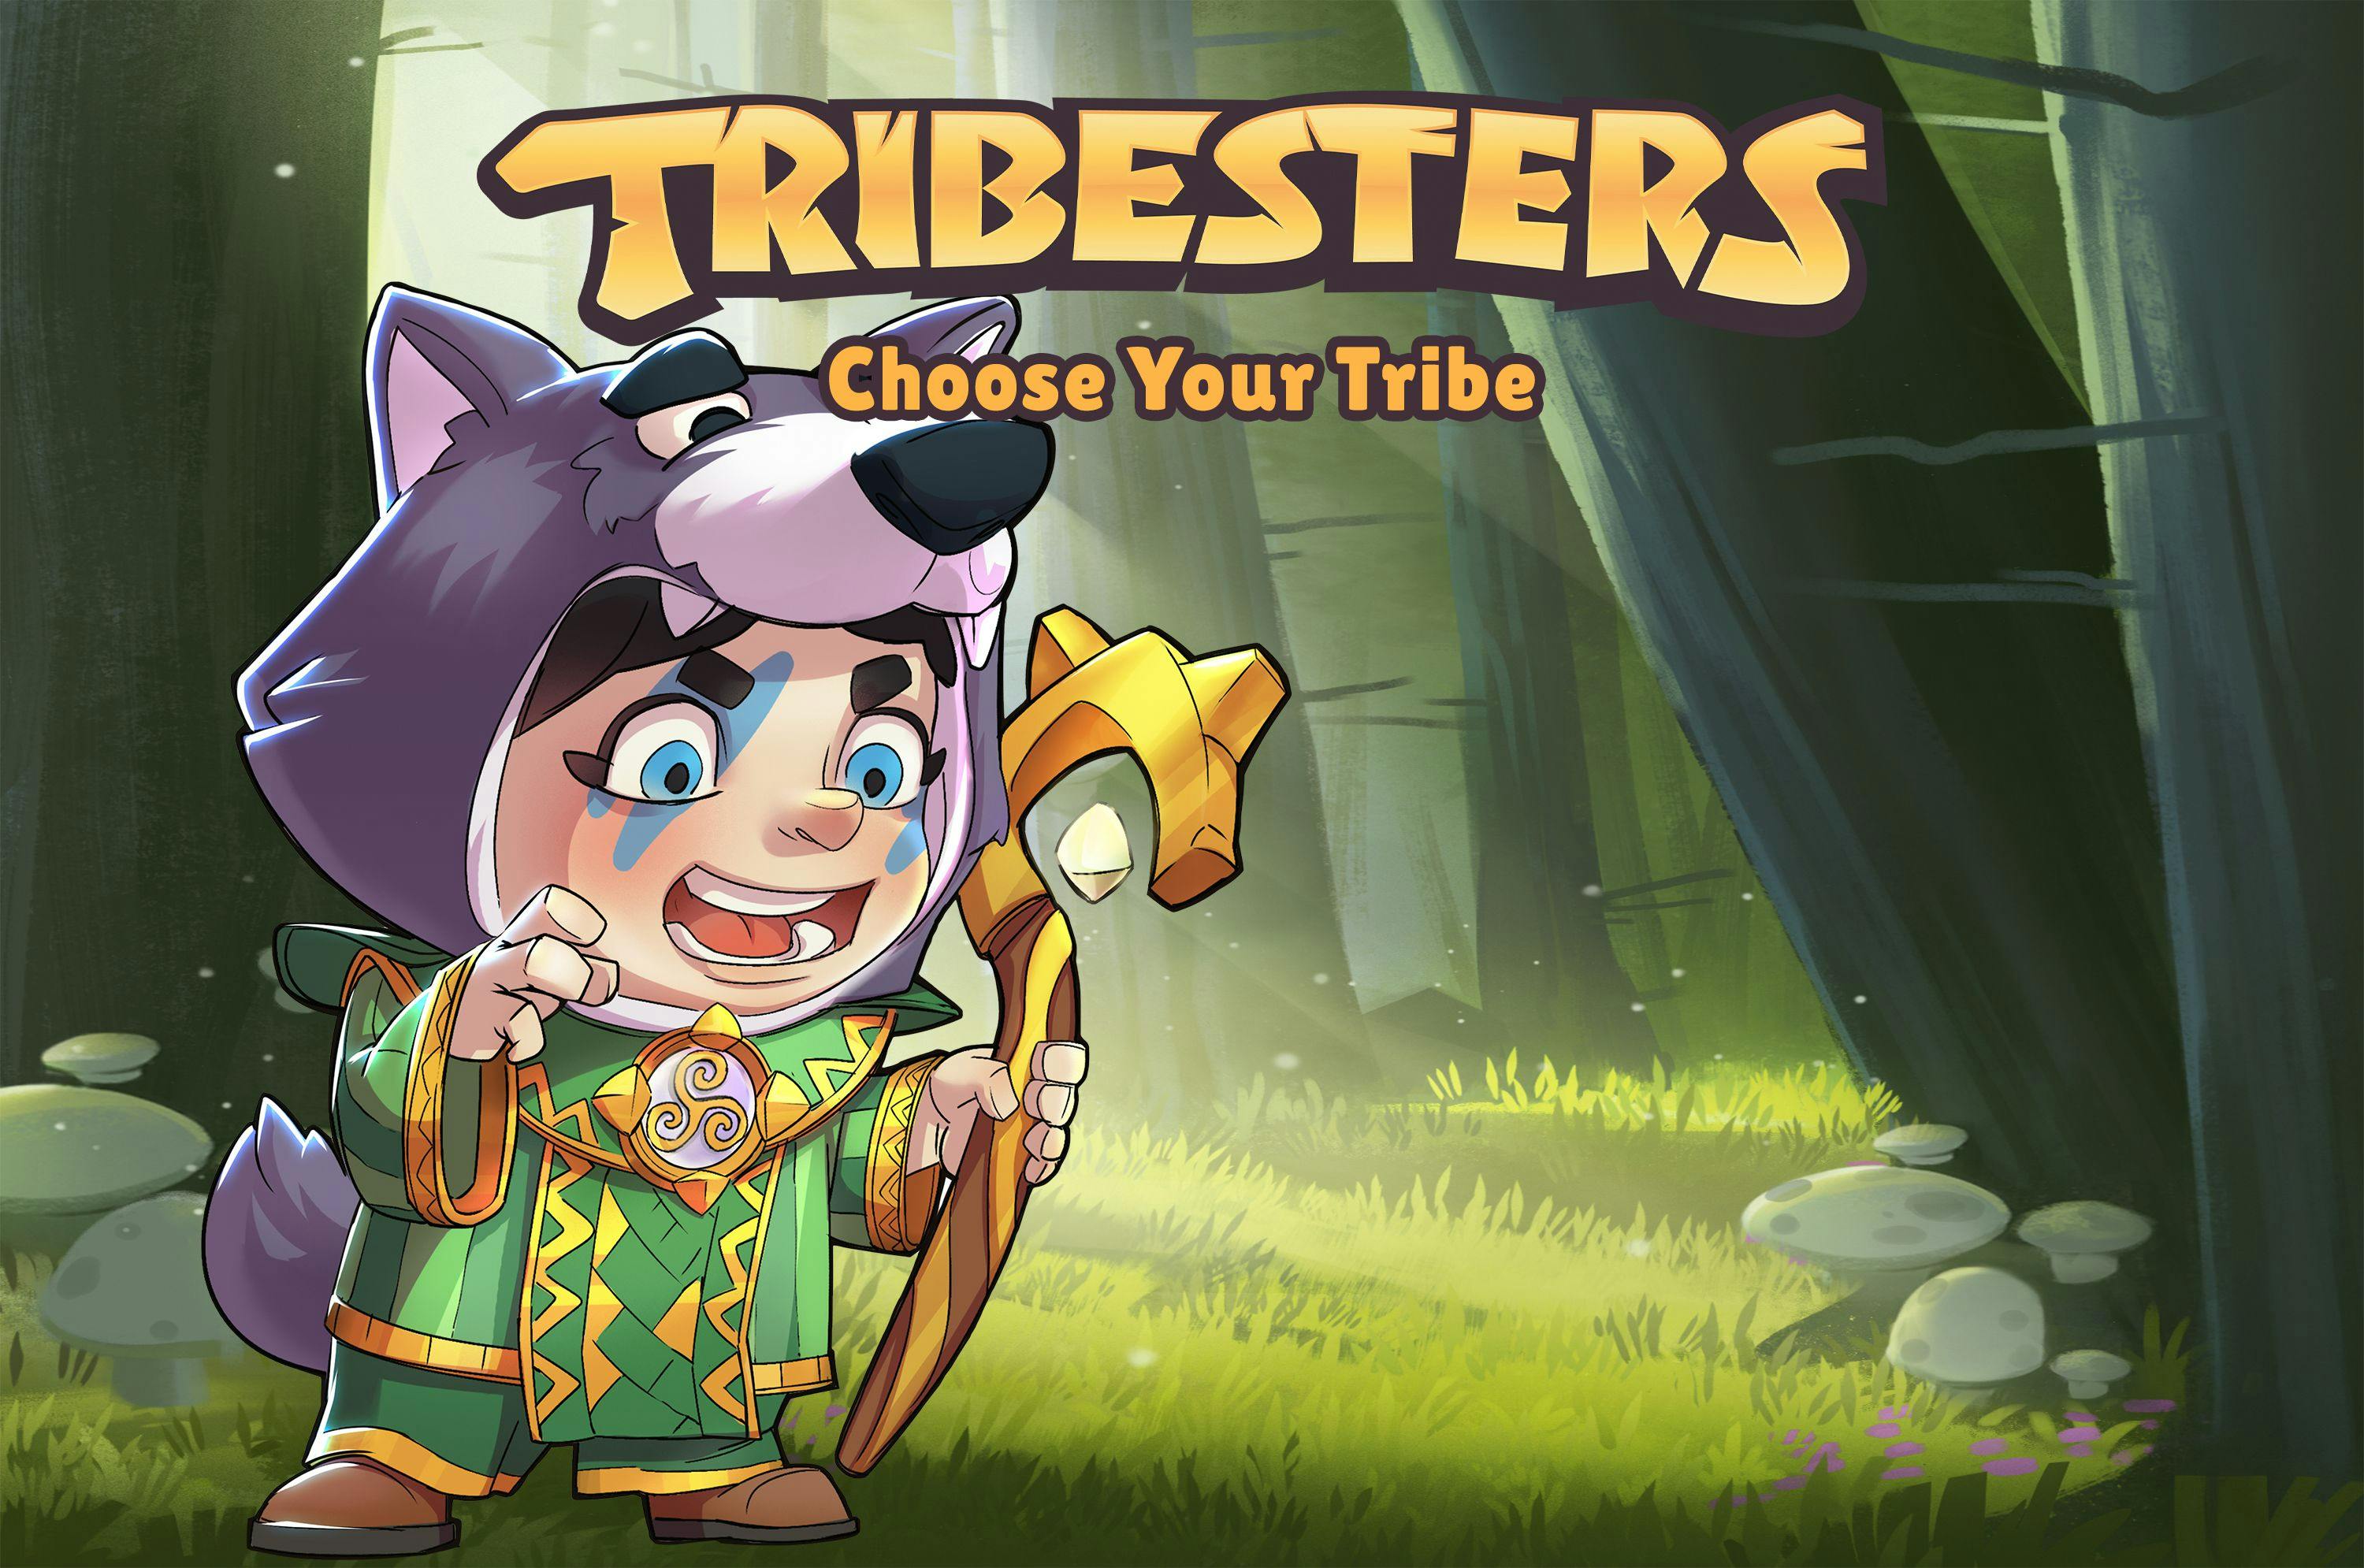 tribesters game image 2.jpg